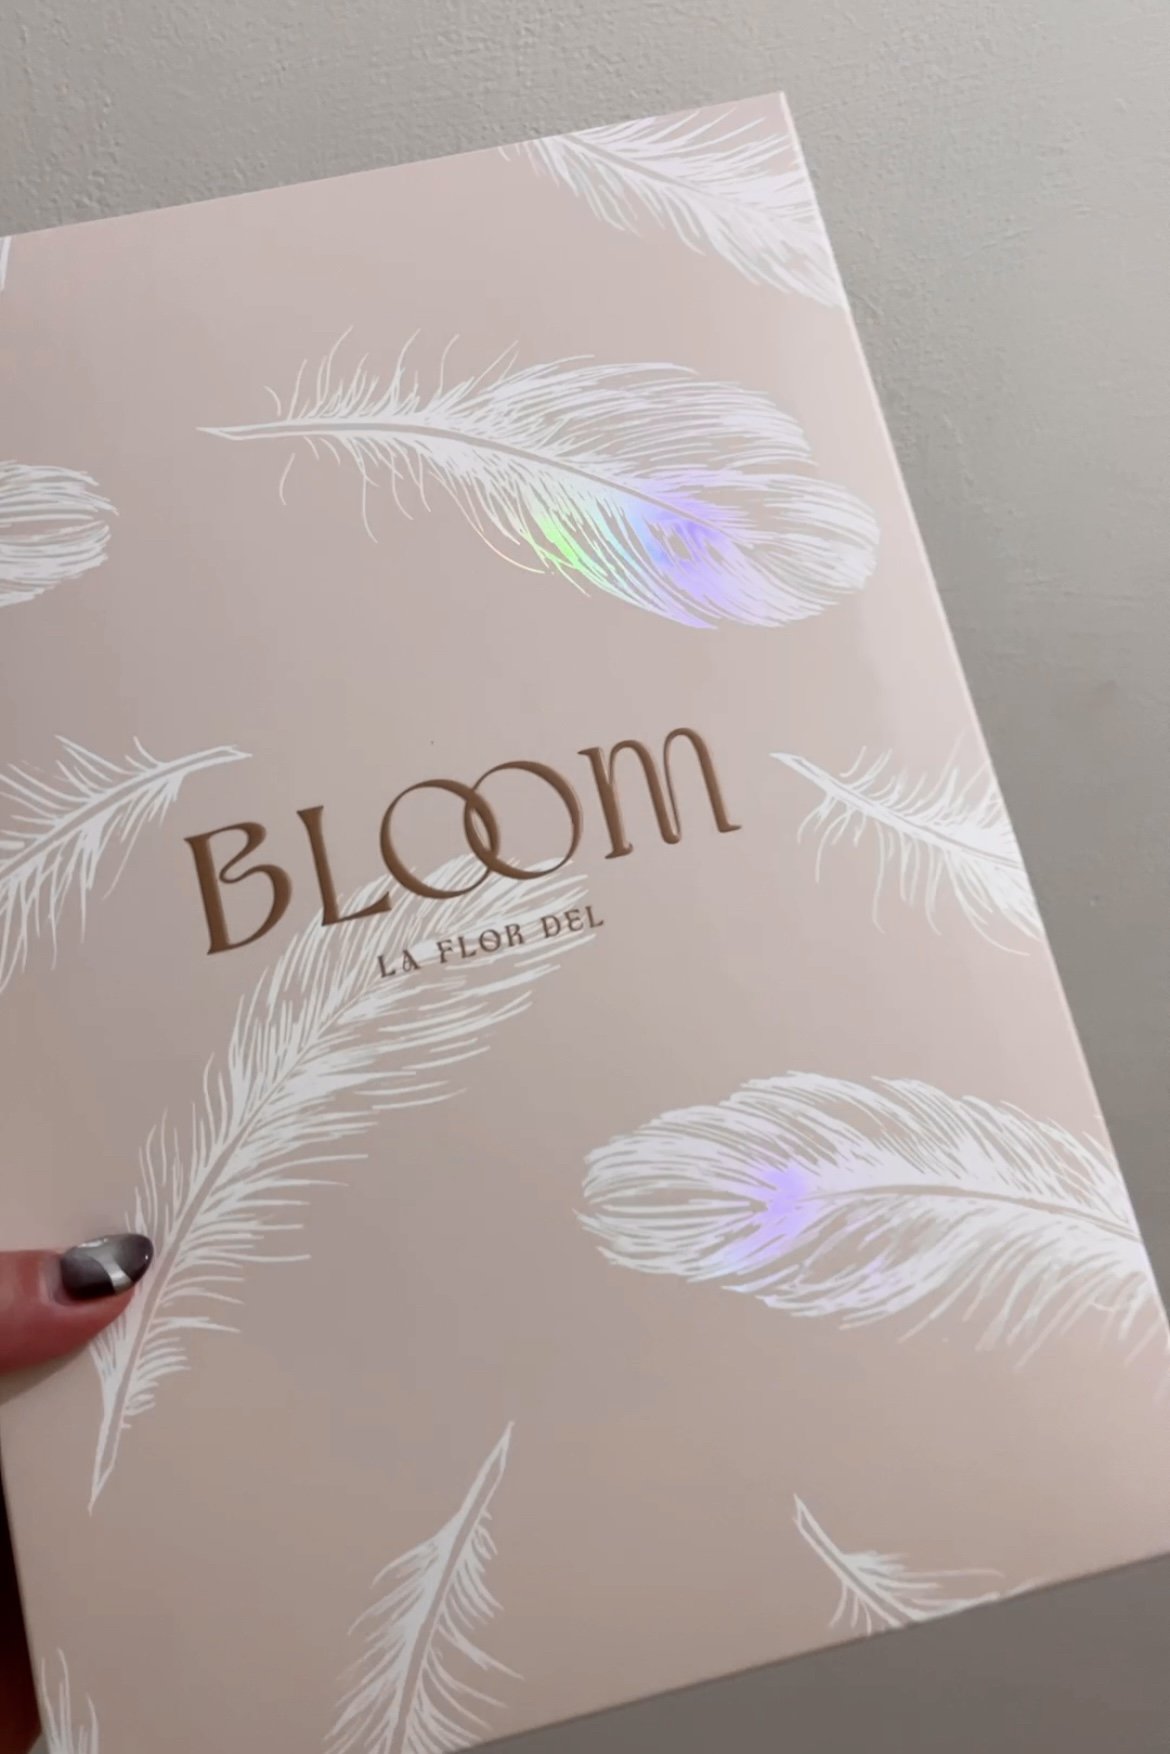 Bloom花神喜餅《試吃經驗》-結婚經驗分享